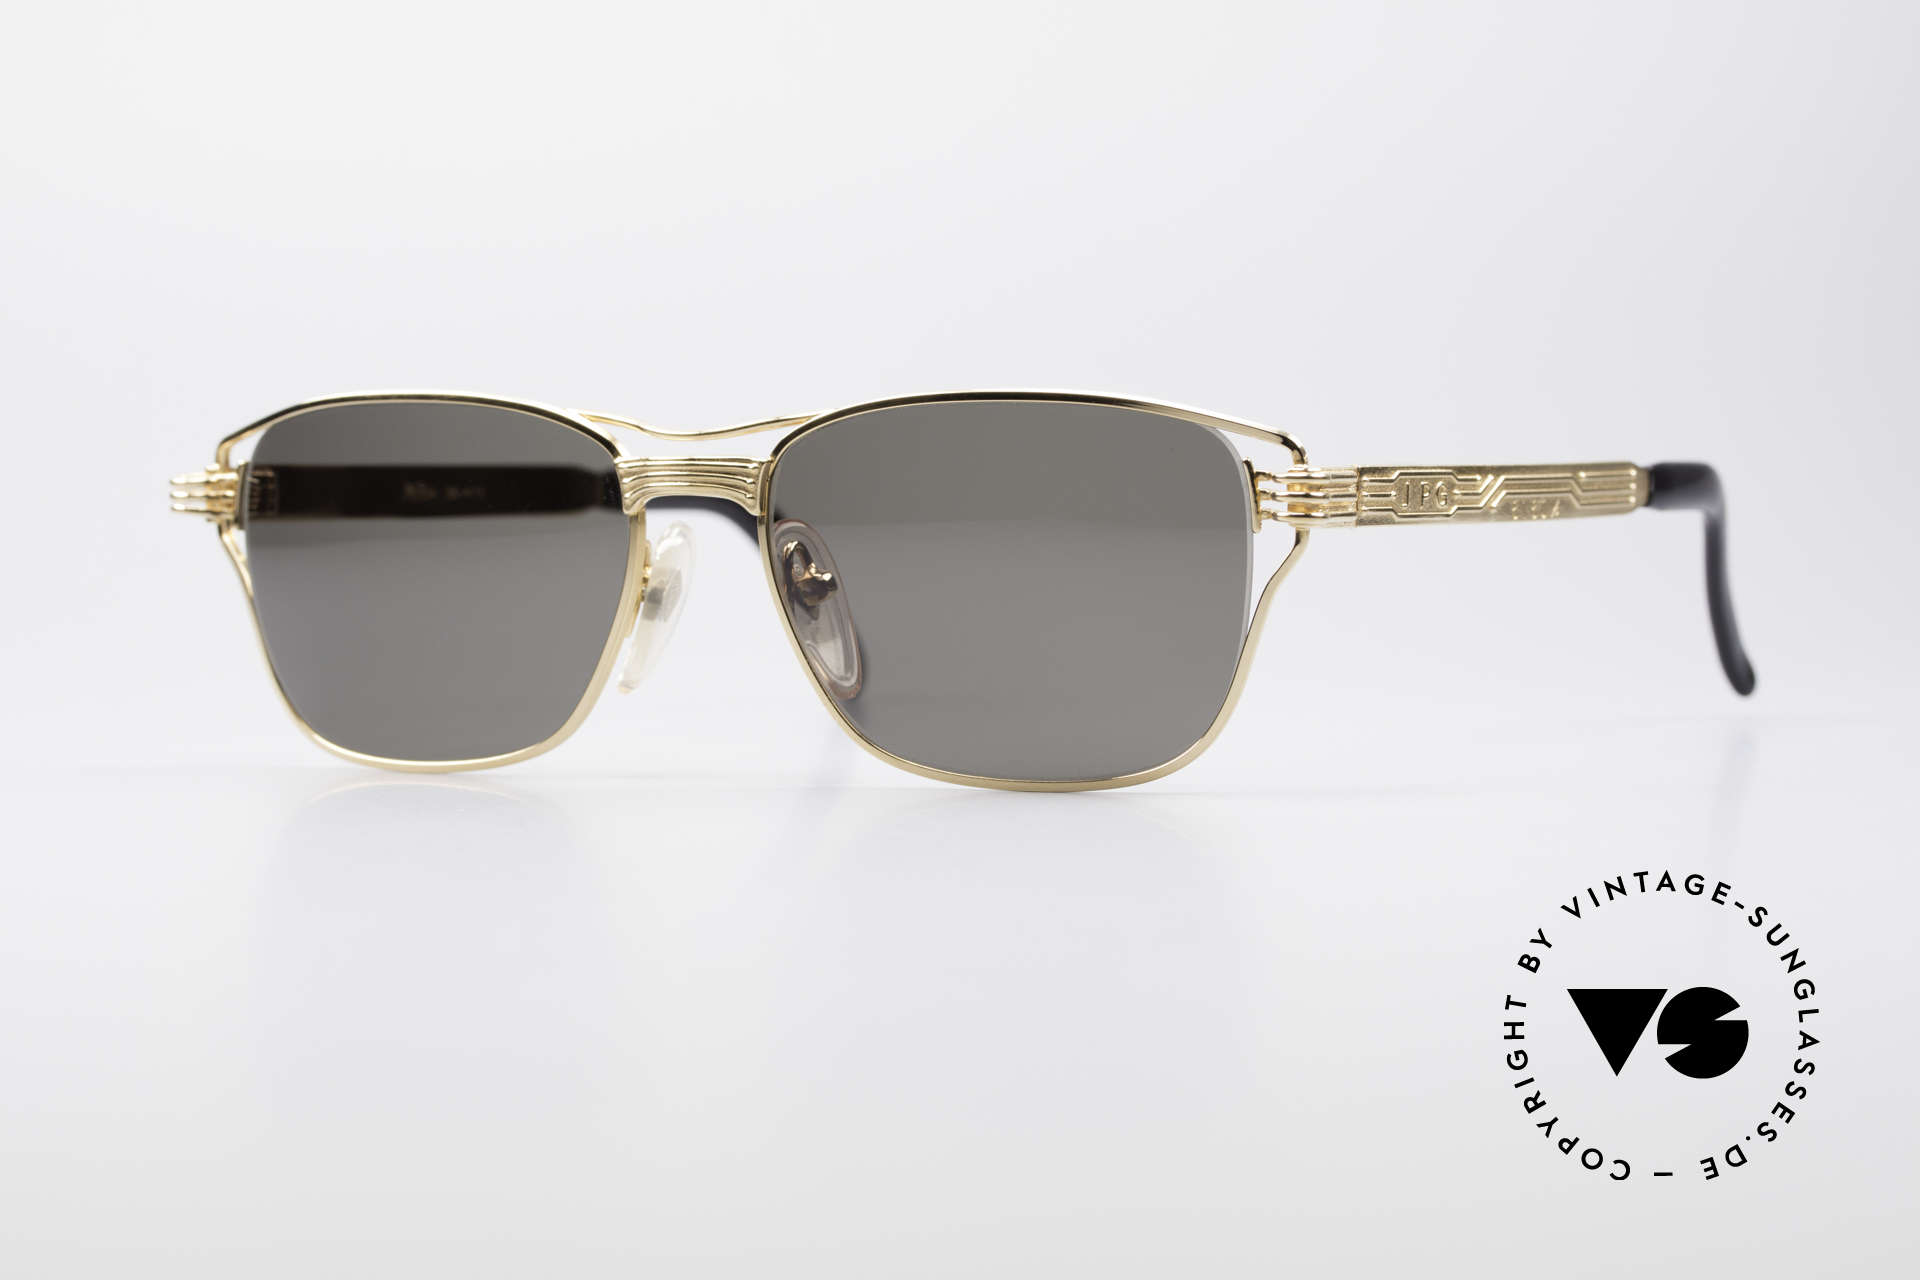 Jean Paul Gaultier 56-4173 Square Designer Sunglasses, square, striking designer sunglasses by Gaultier, Made for Men